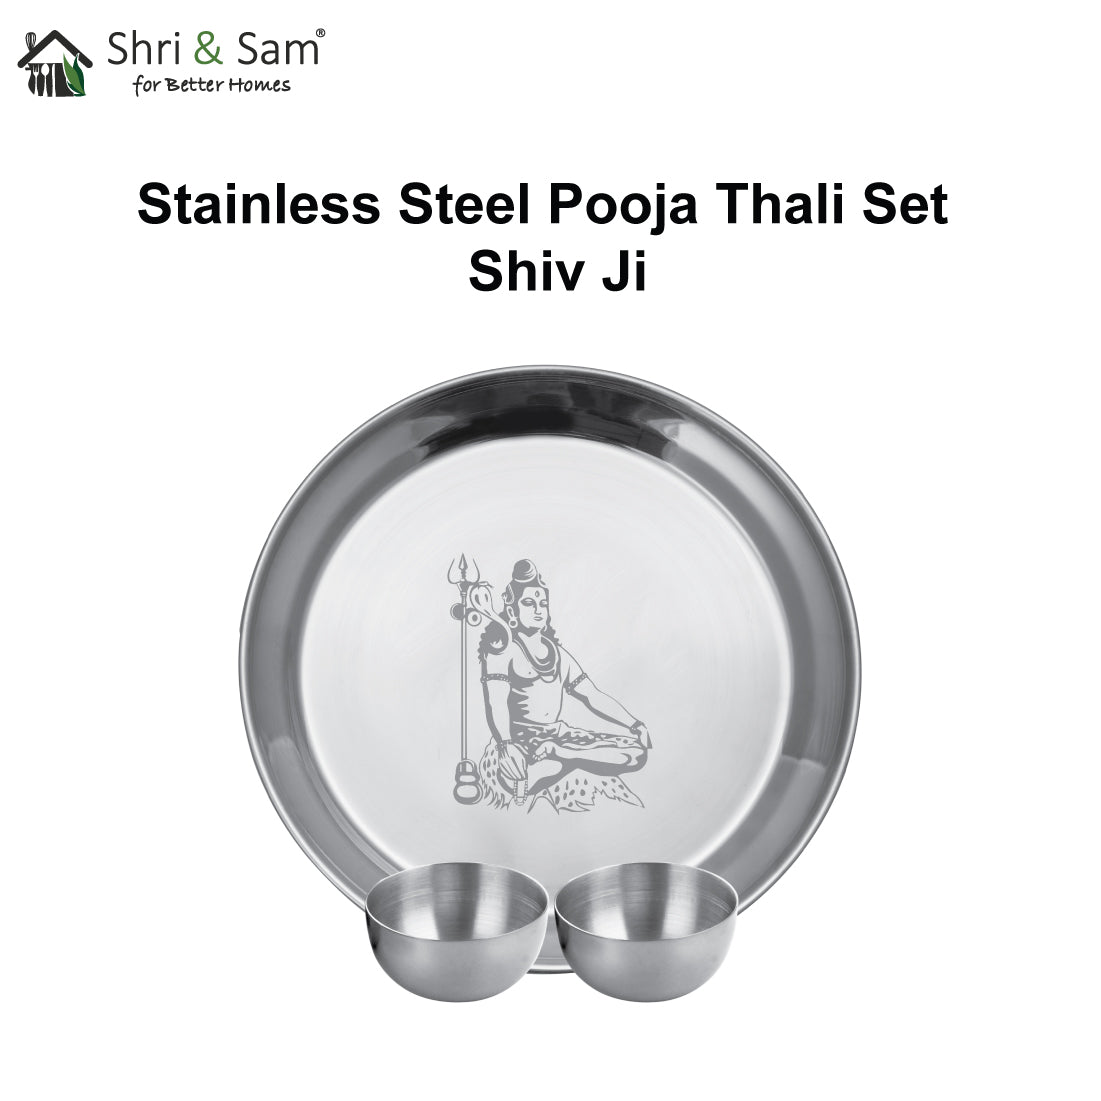 Stainless Steel Pooja Thali Set Shiv